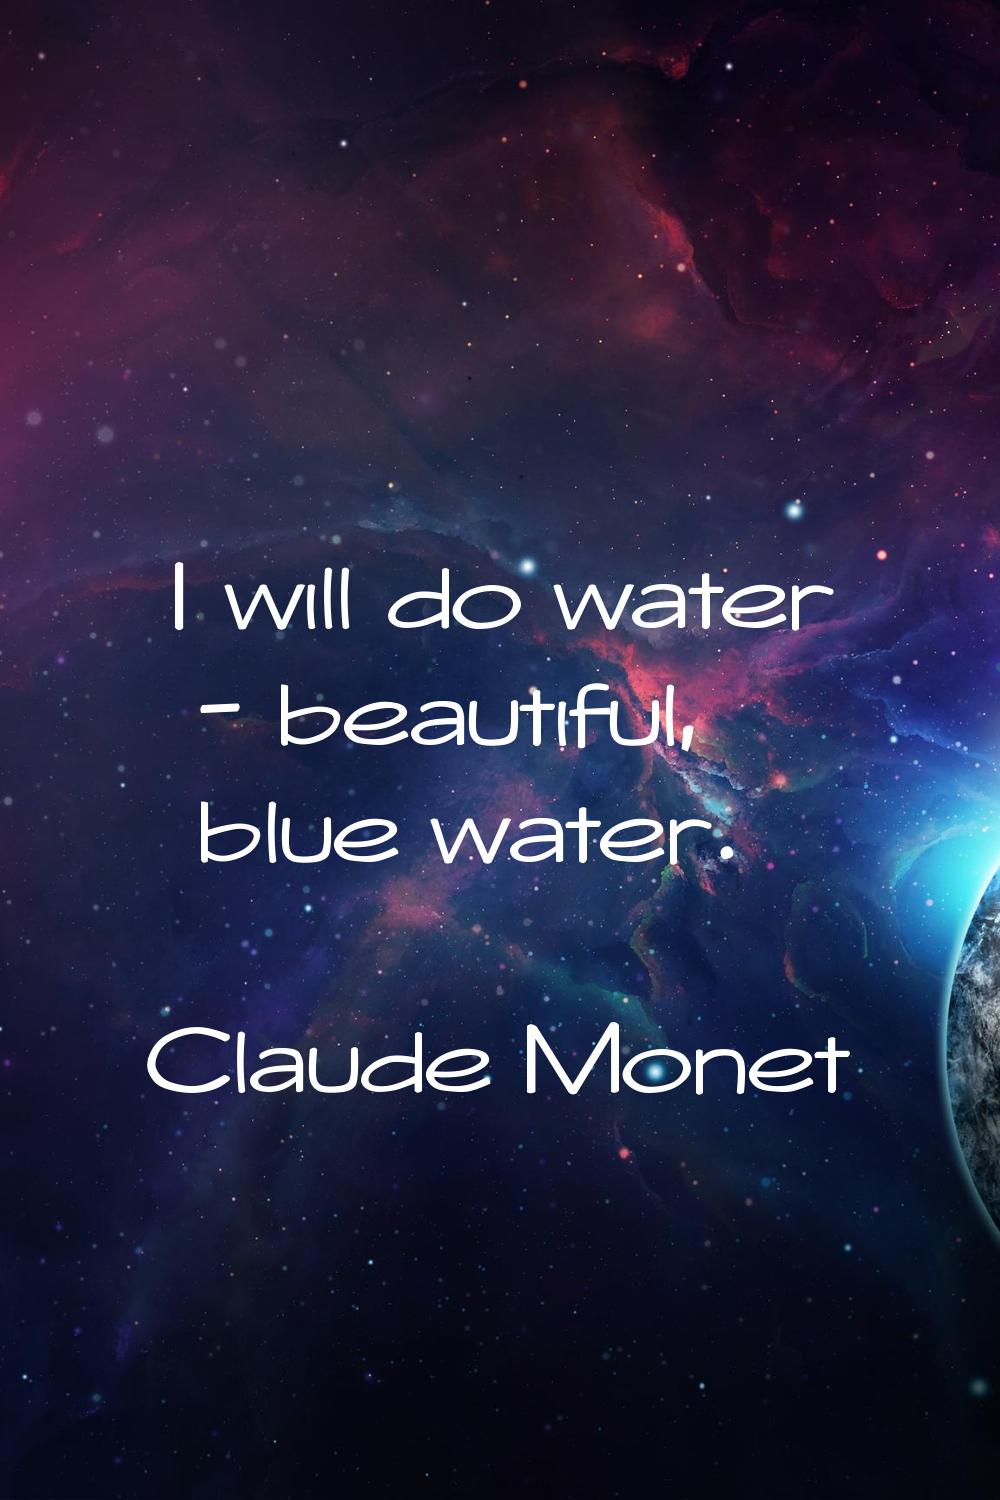 I will do water - beautiful, blue water.